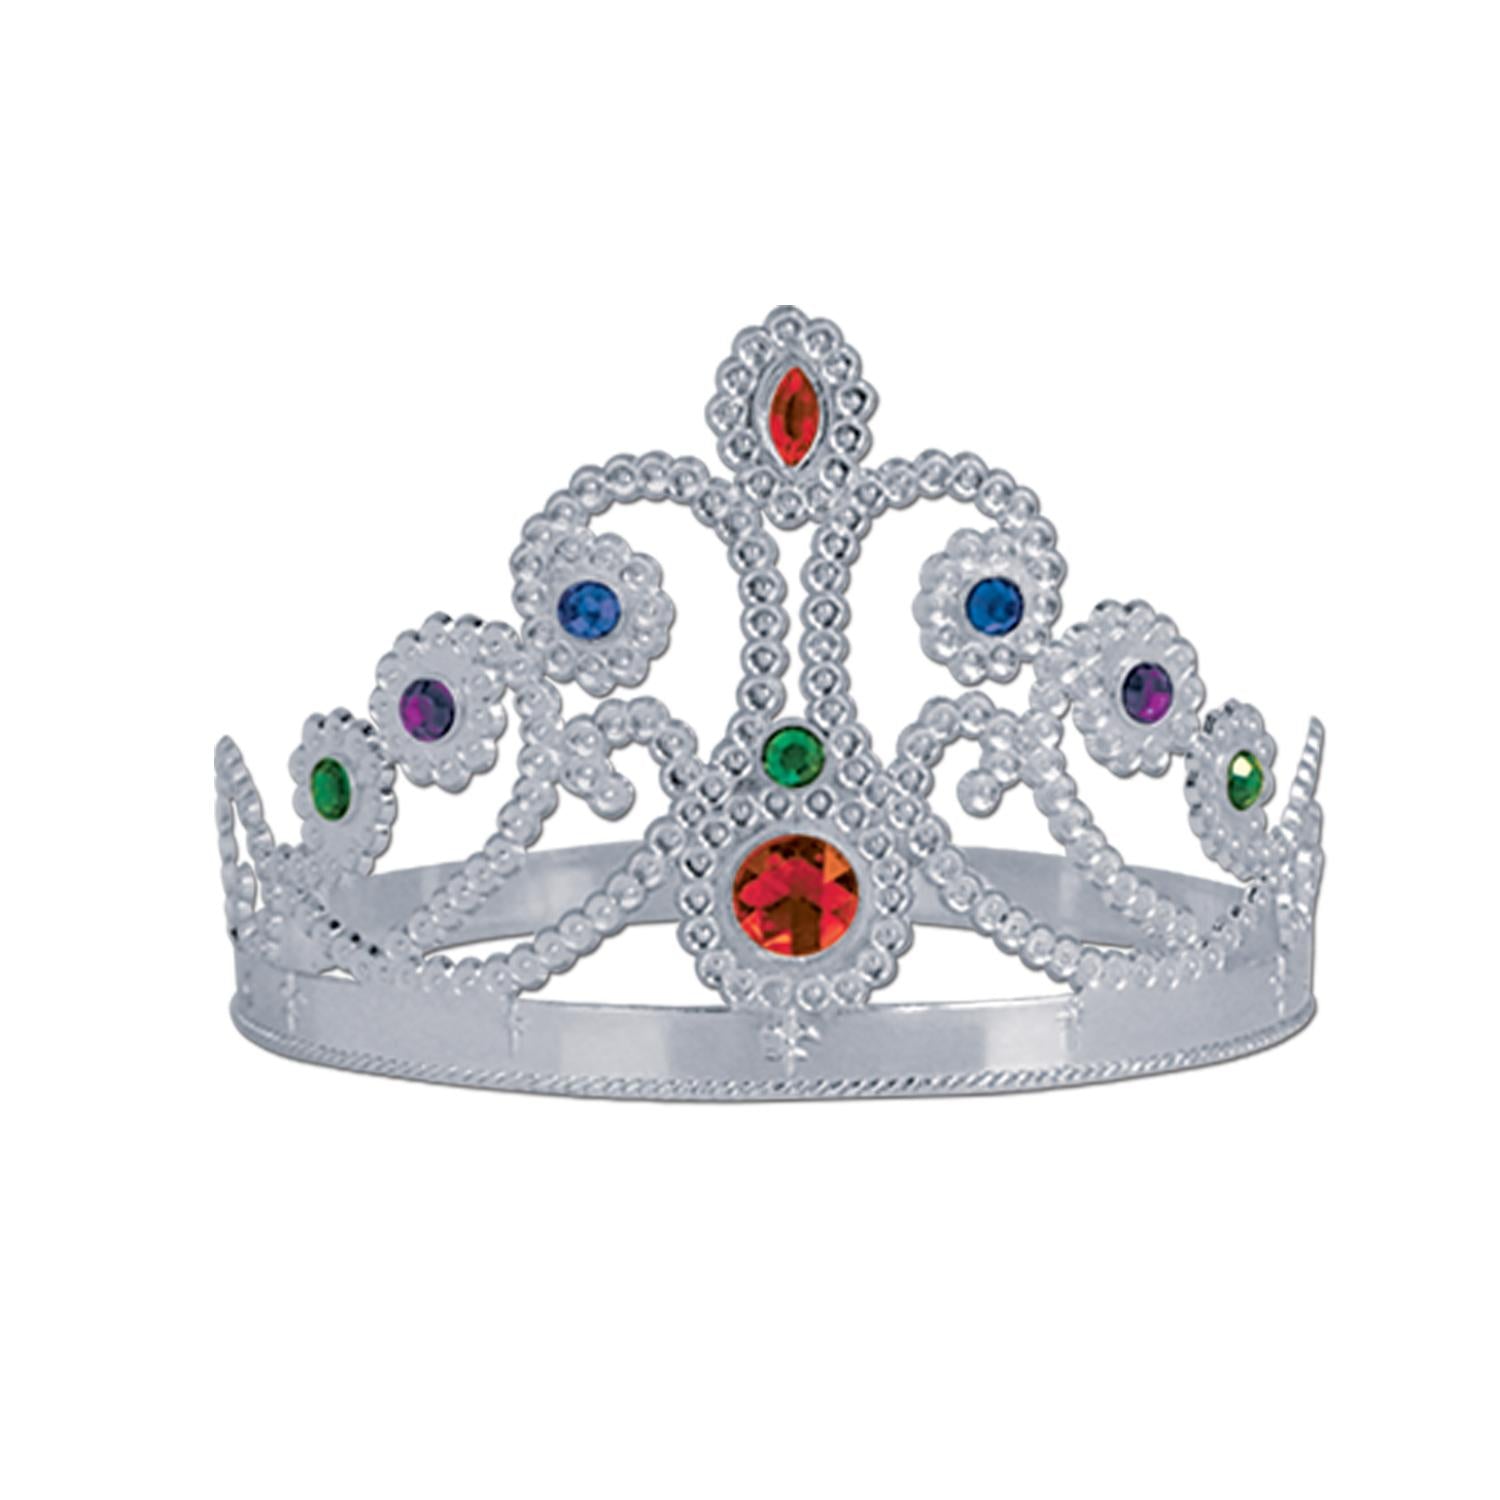 Beistle Mardi Gras Plastic Jeweled Queen's Tiara - Silver